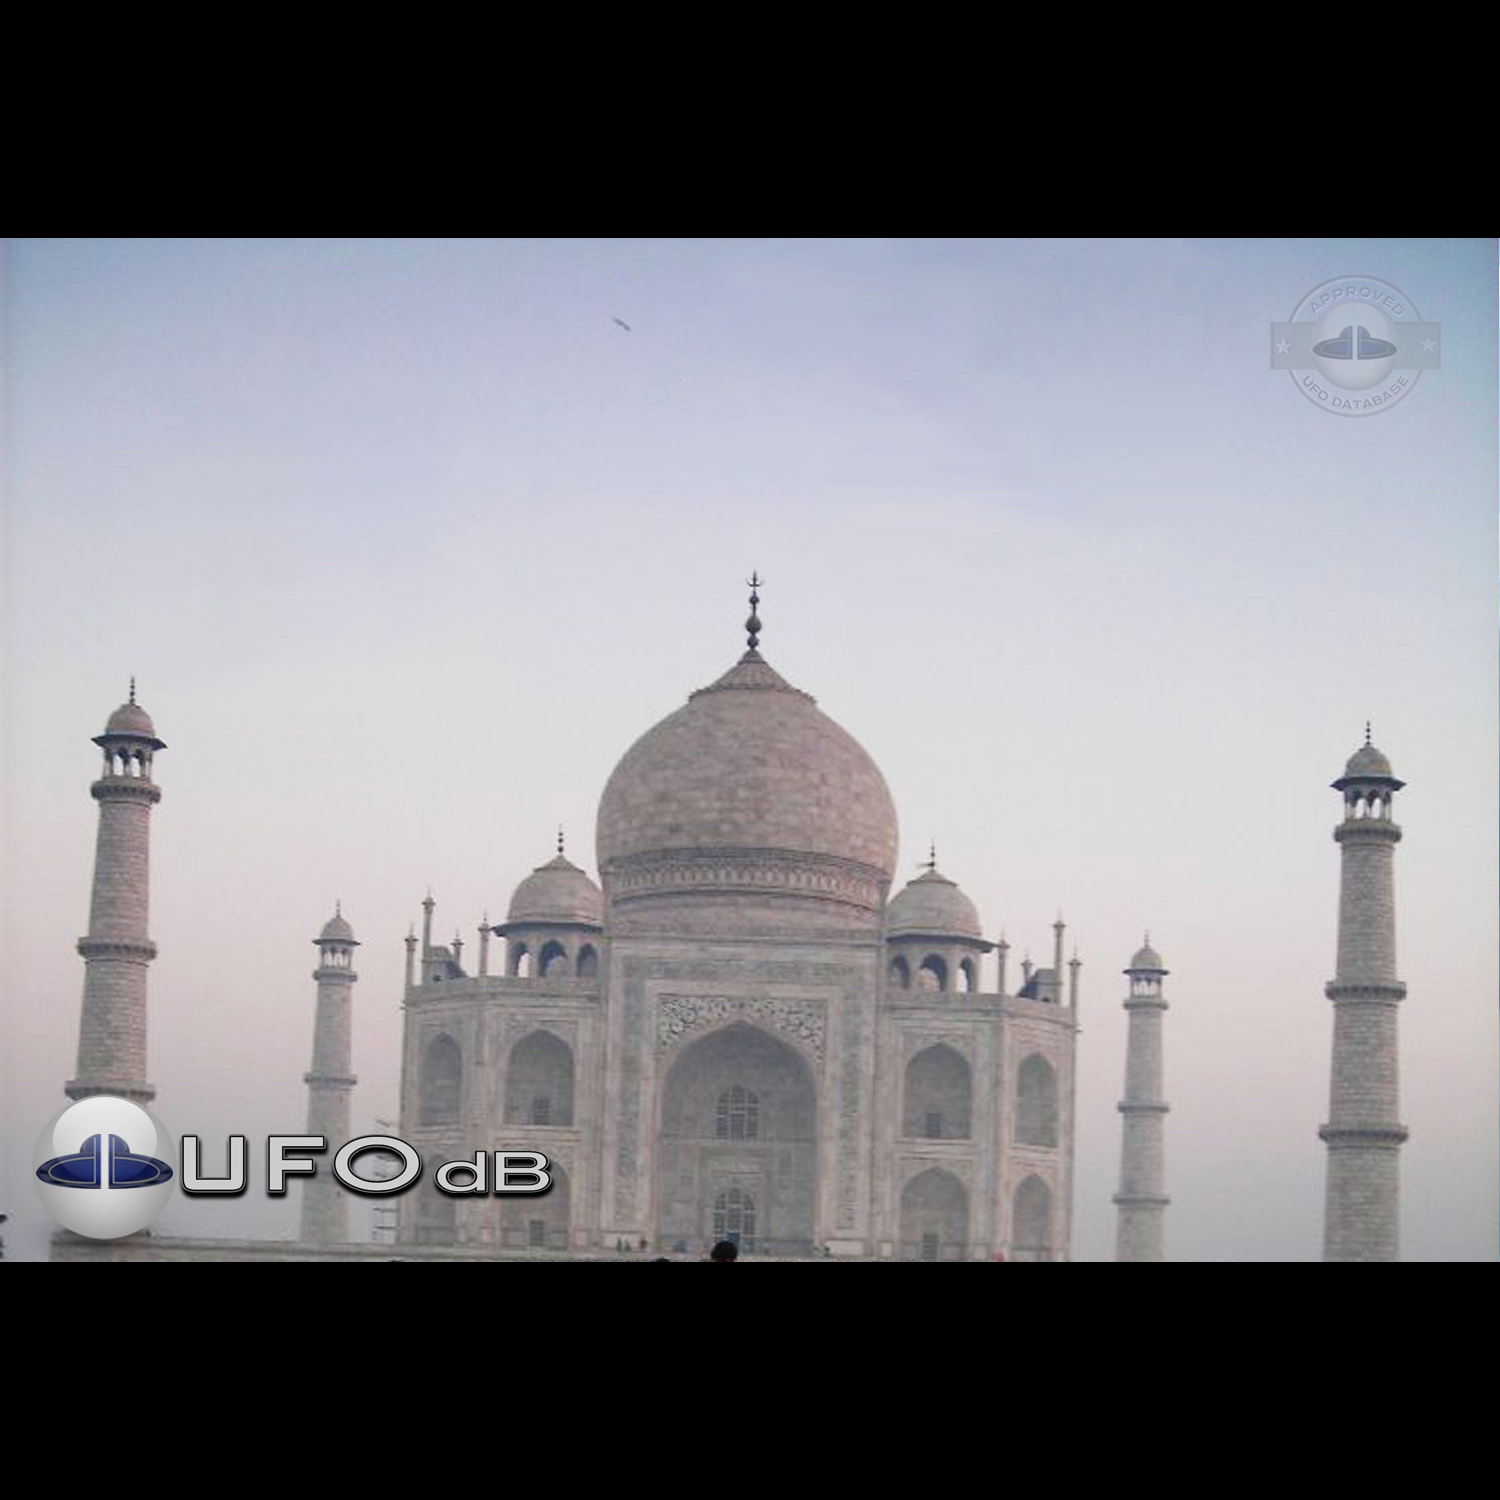 UFO over famous Taj Mahal | Agra, Uttar Pradesh | India UFO picture UFO Picture #186-1